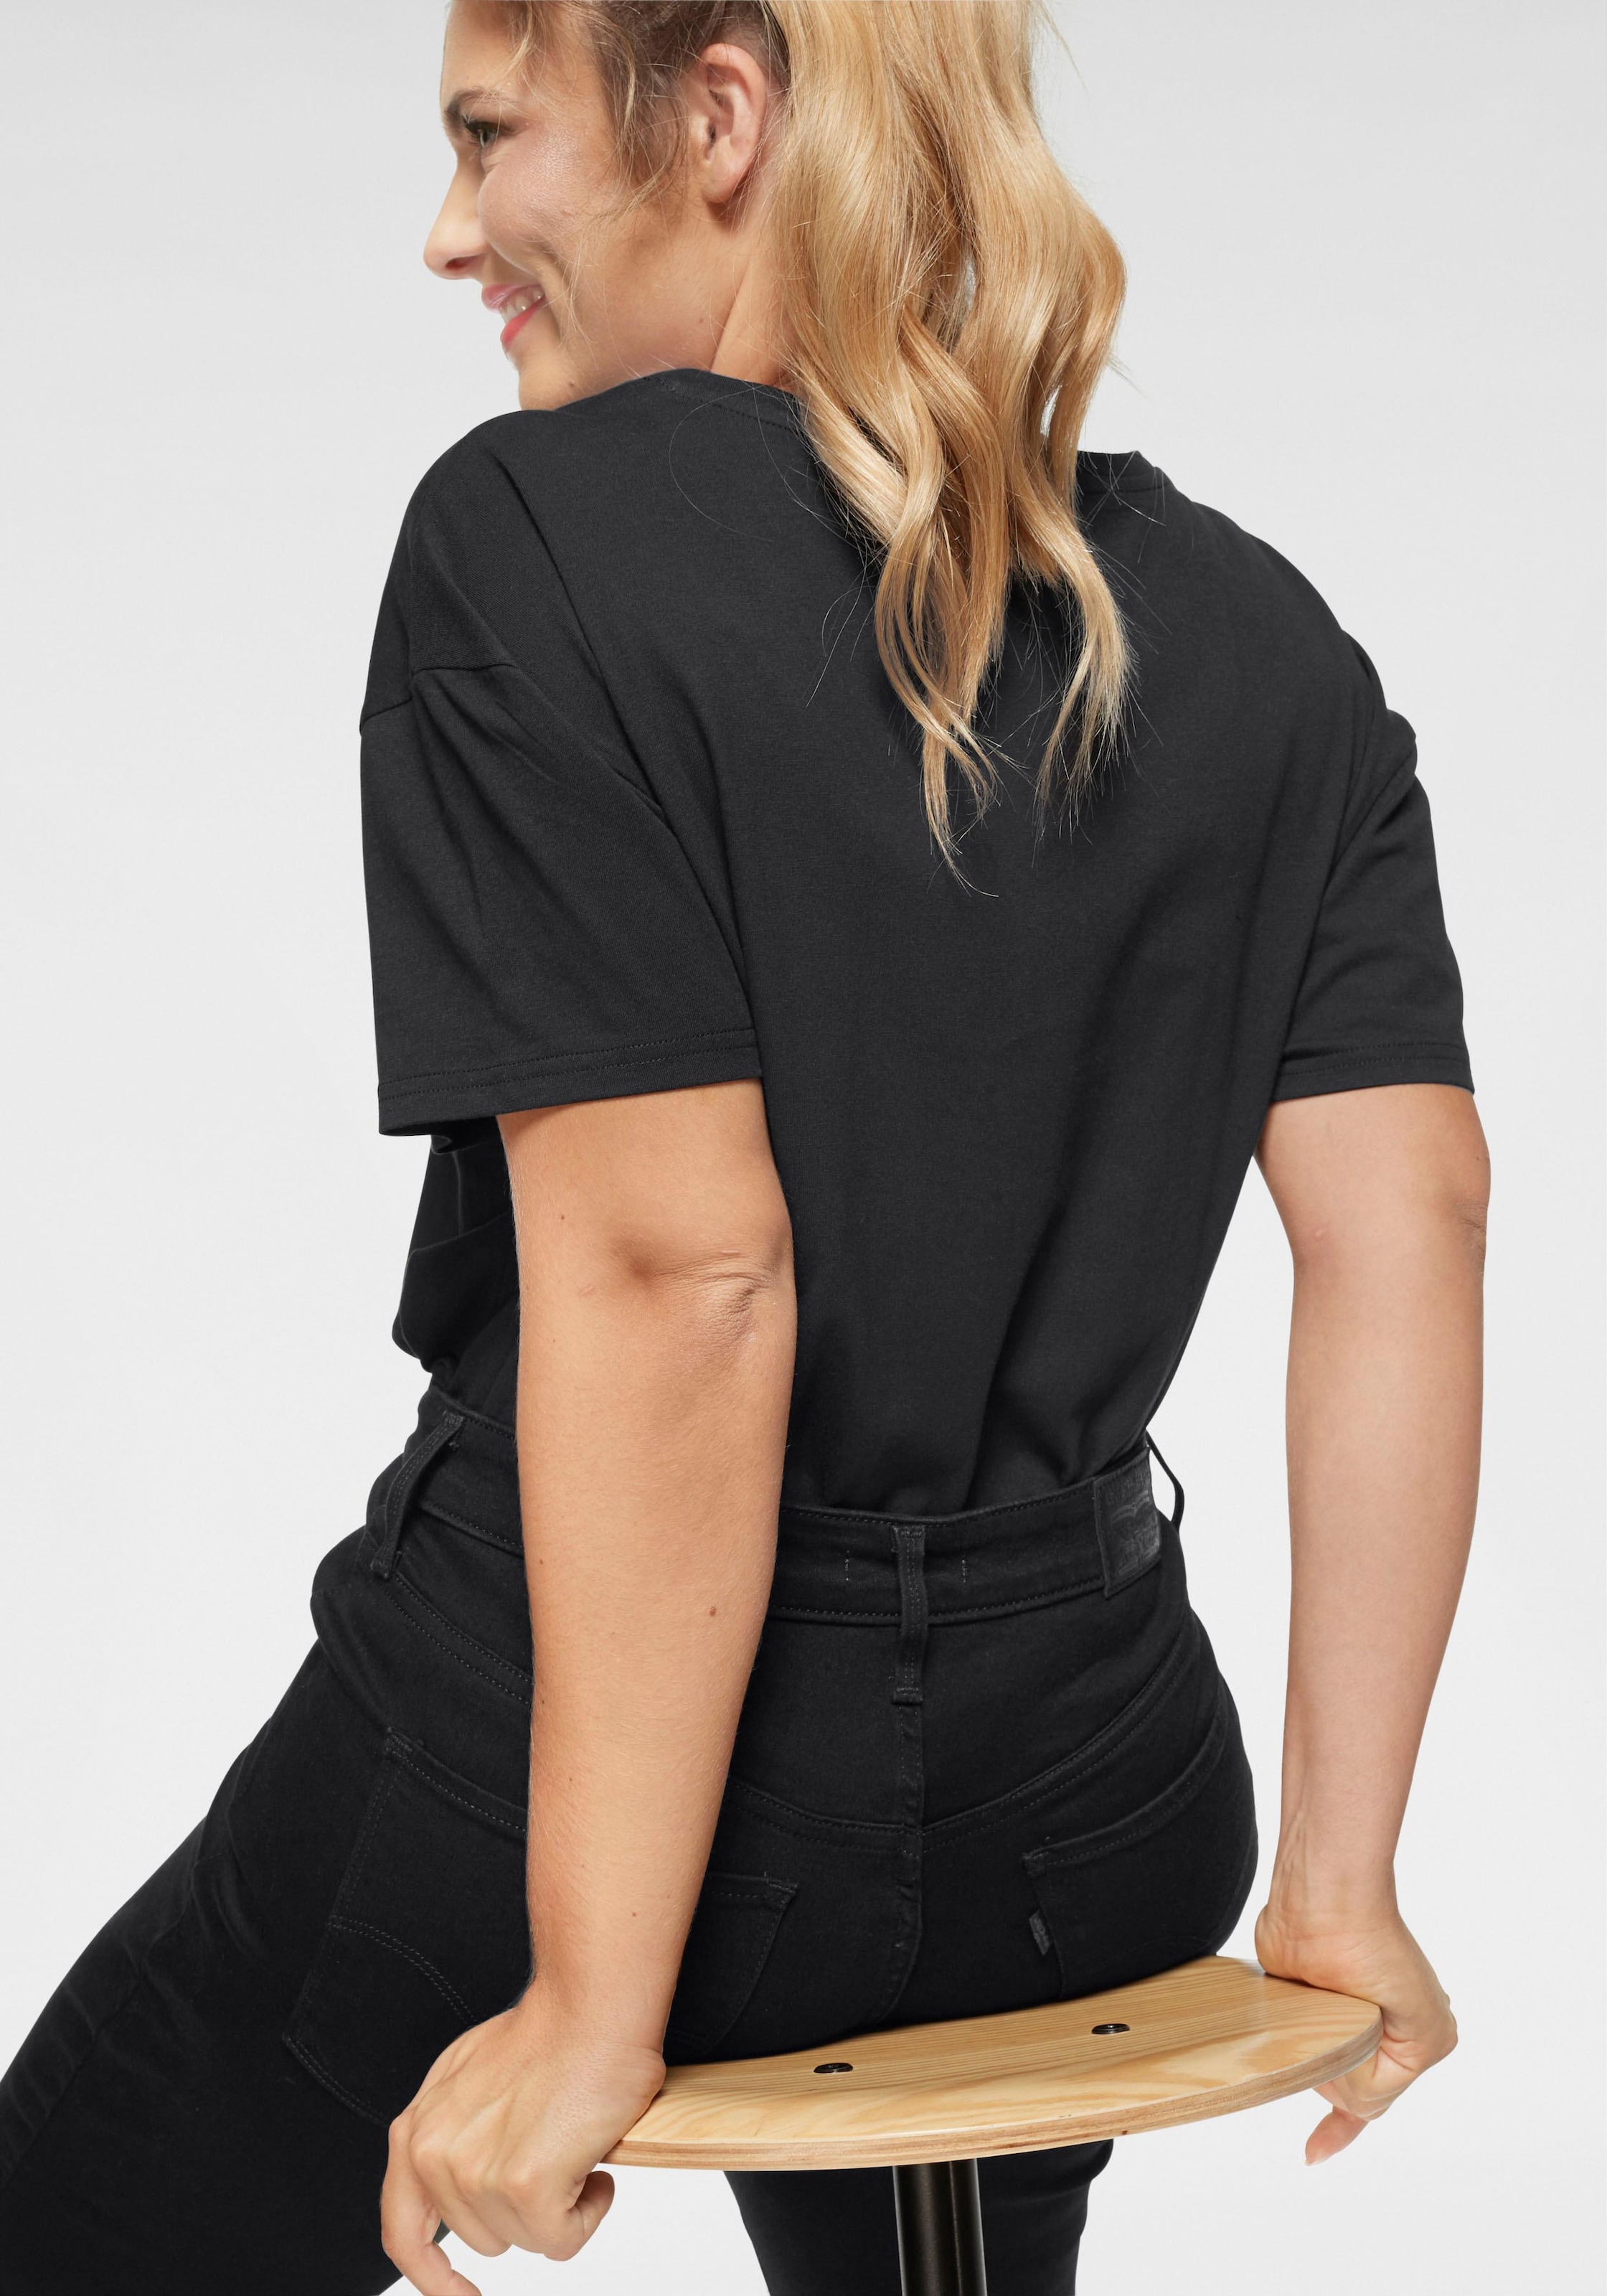 Black - KOLLEKTION BAUR im Friday trendigen T-Shirt, AJC Oversized-Look | NEUE